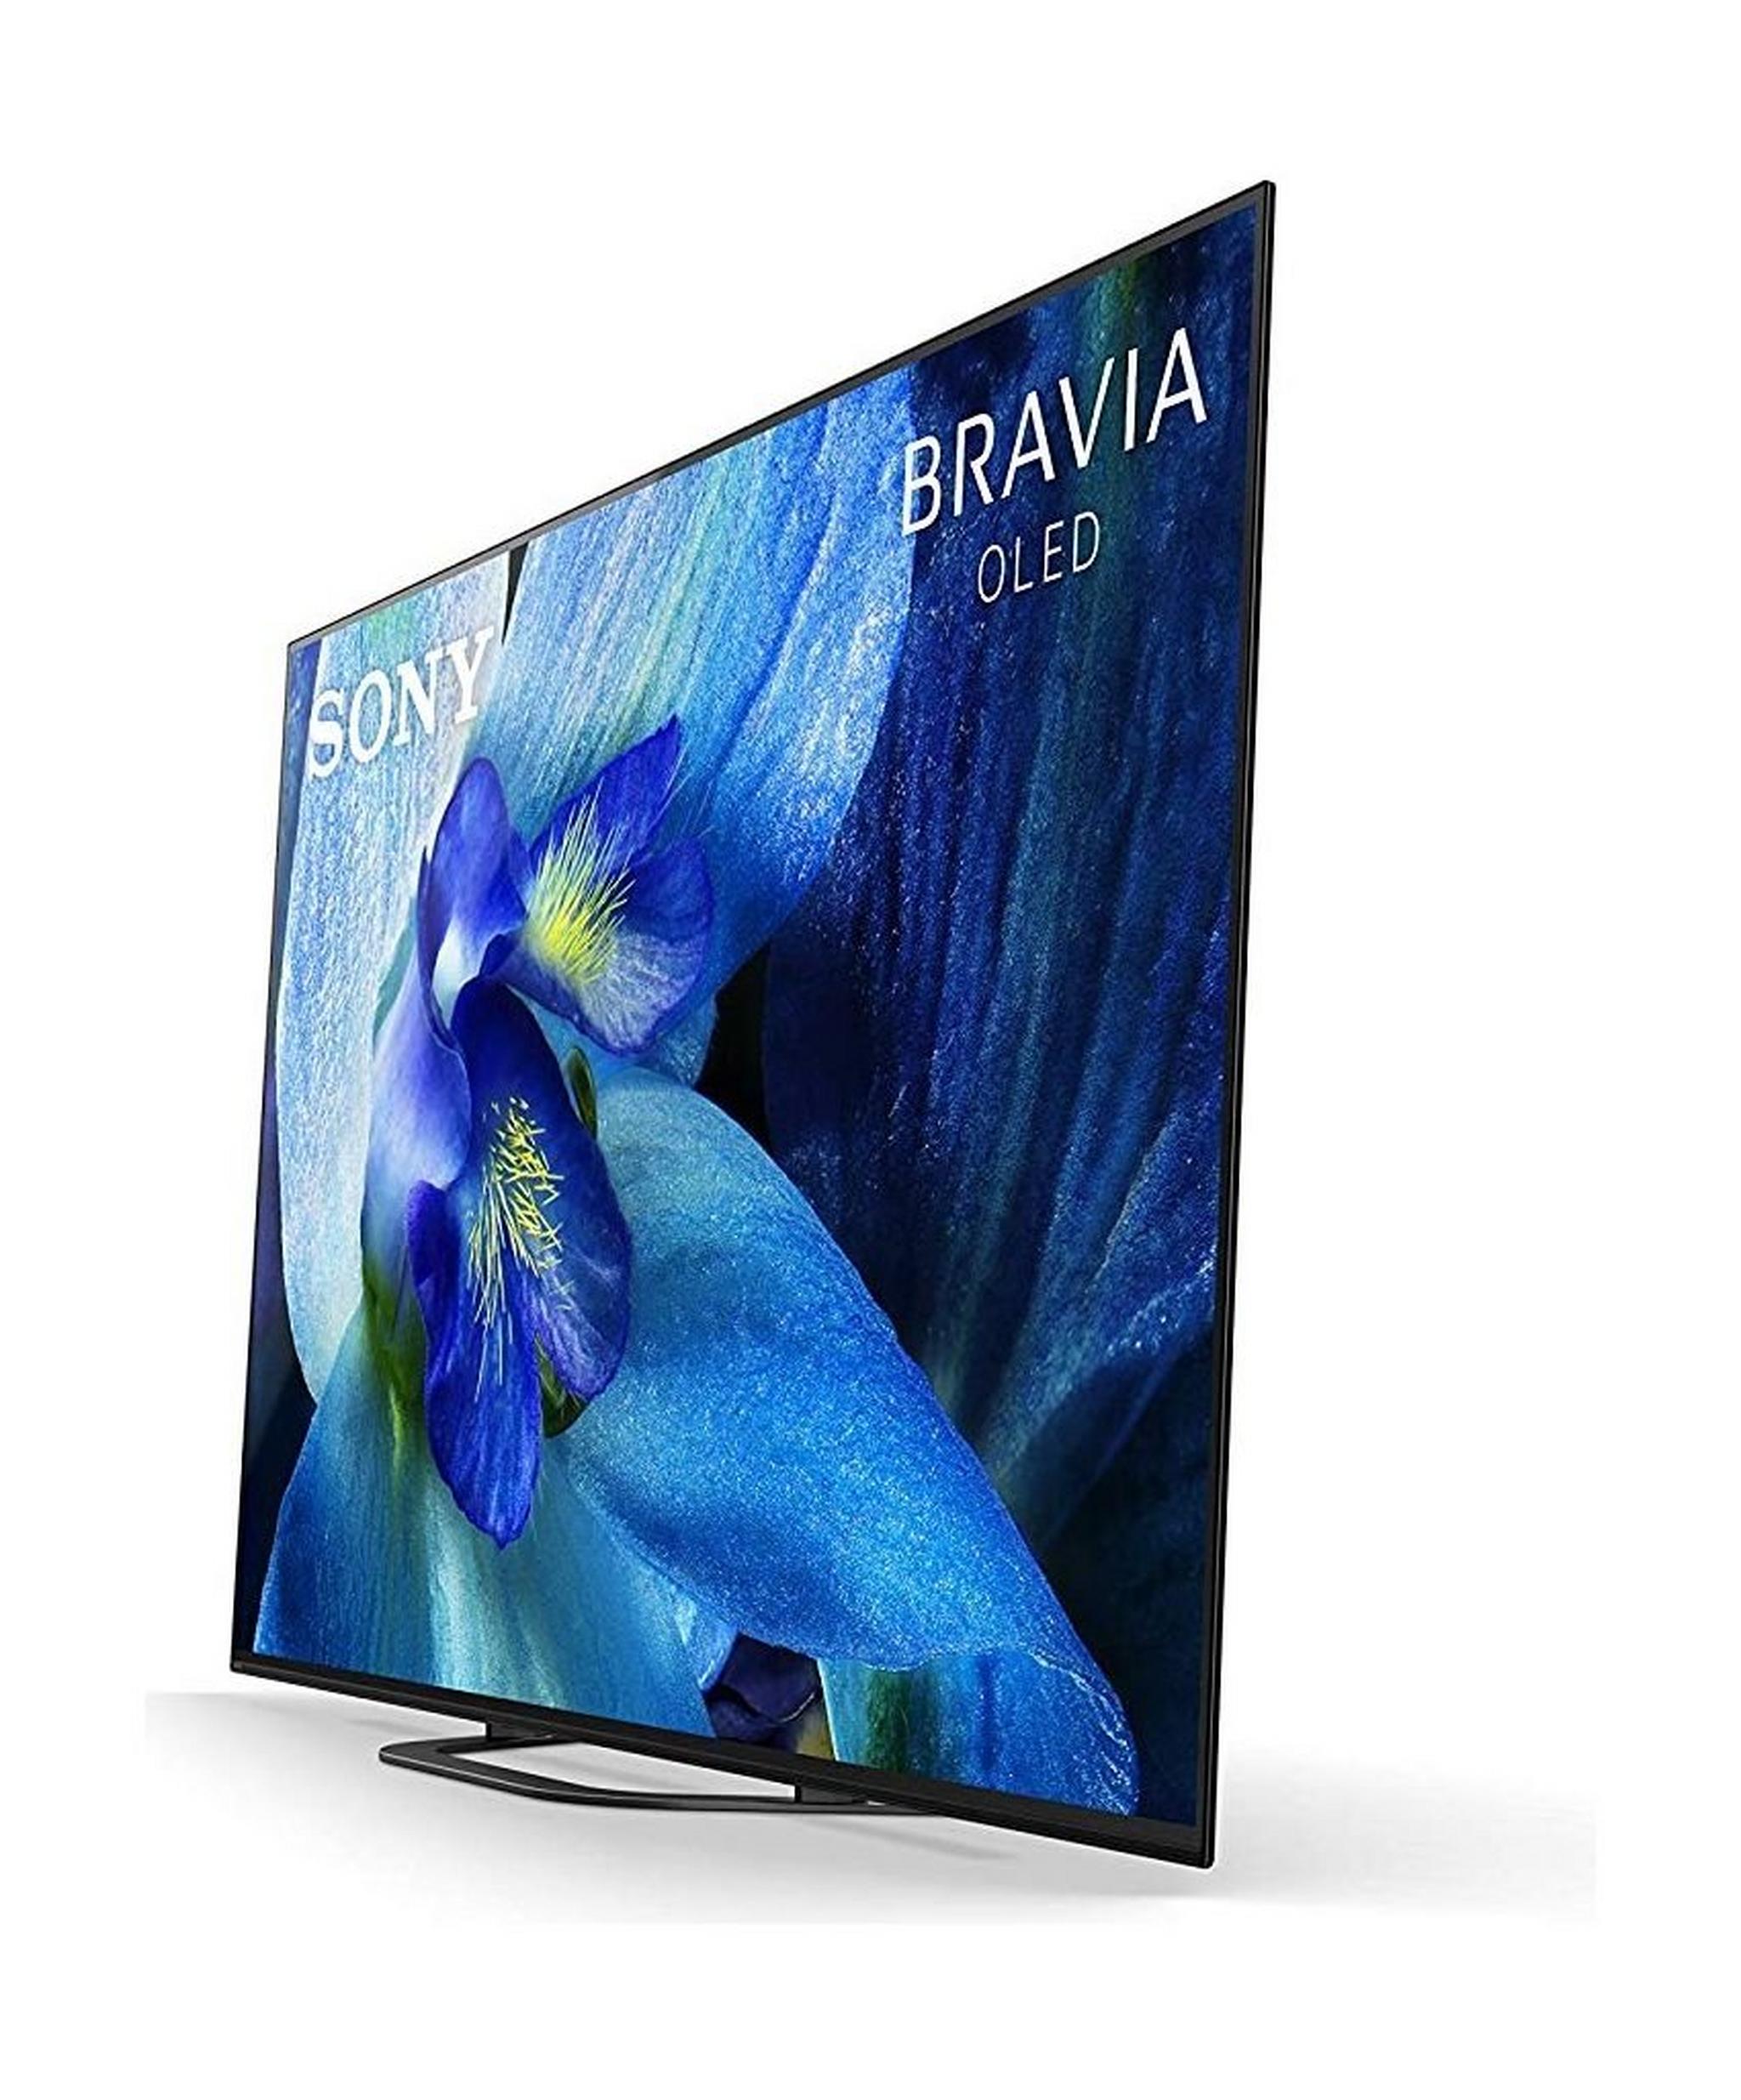 SONY Bravia A8G 55-inch 4K Ultra HD Smart OLED TV